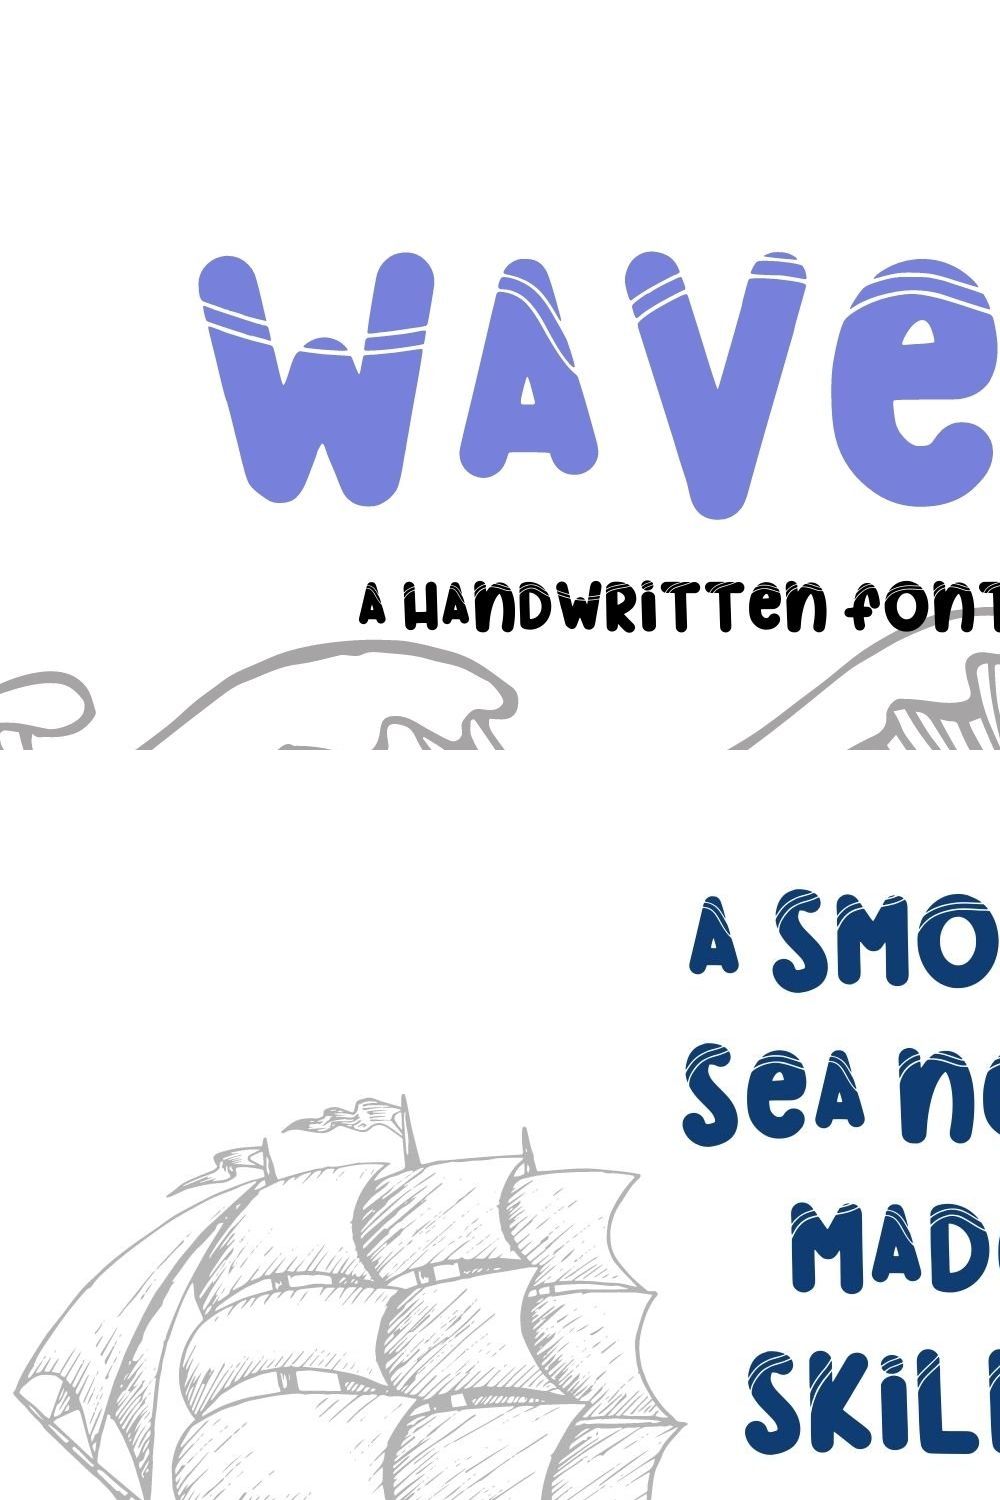 Waves Handwritten Bubble Font pinterest preview image.